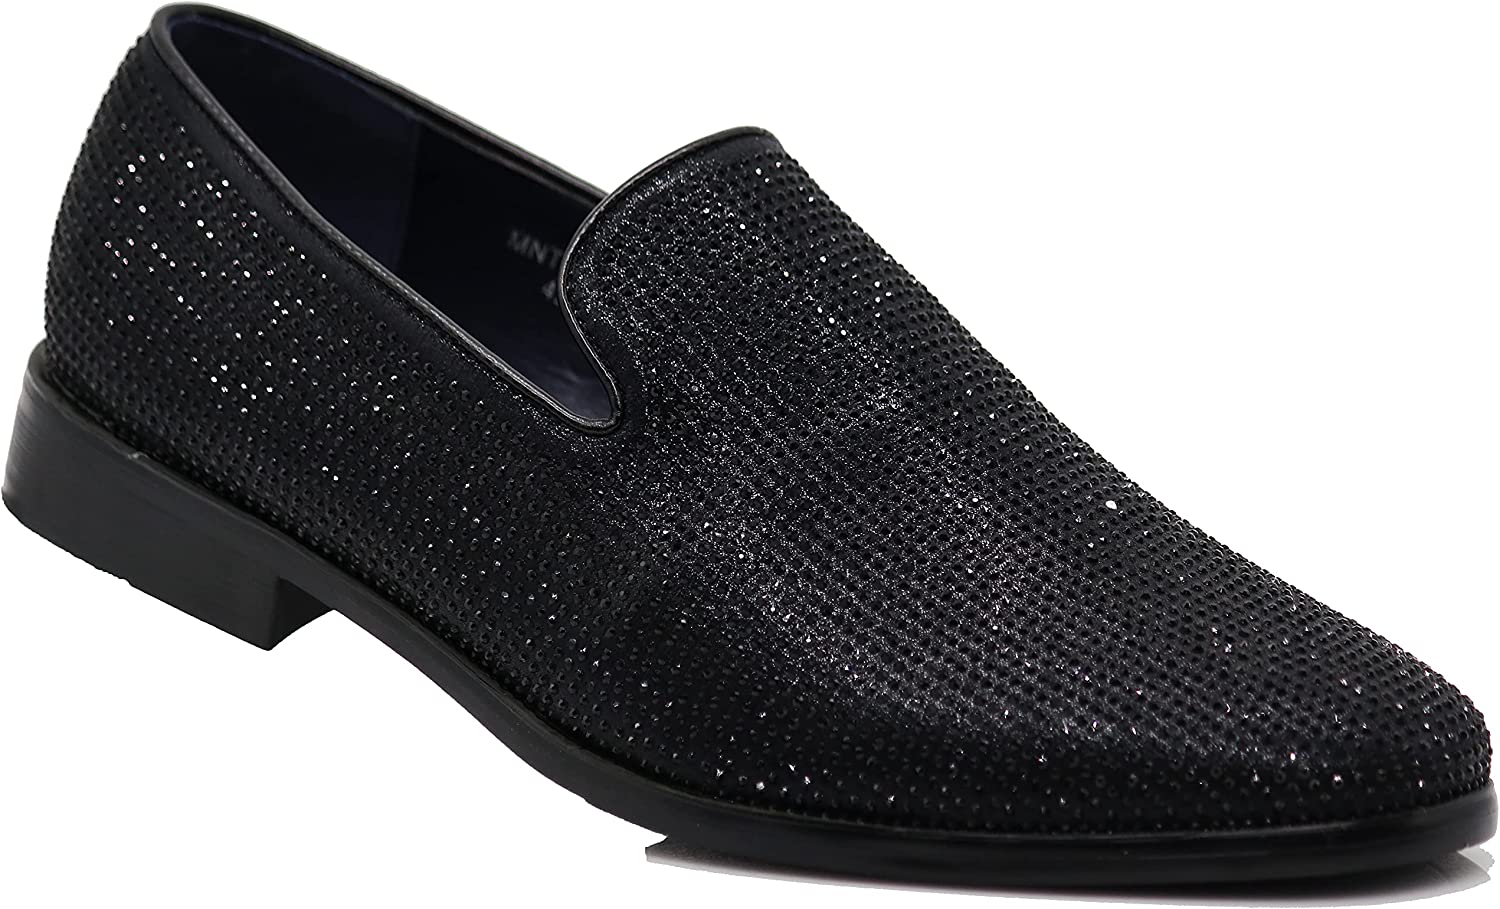  SPK24 Men Vintage Spikes Sparkle Formal Tuxedo Stage Fashion  Slip On Loafer Dress Shoes (Black (46), Numeric_7)